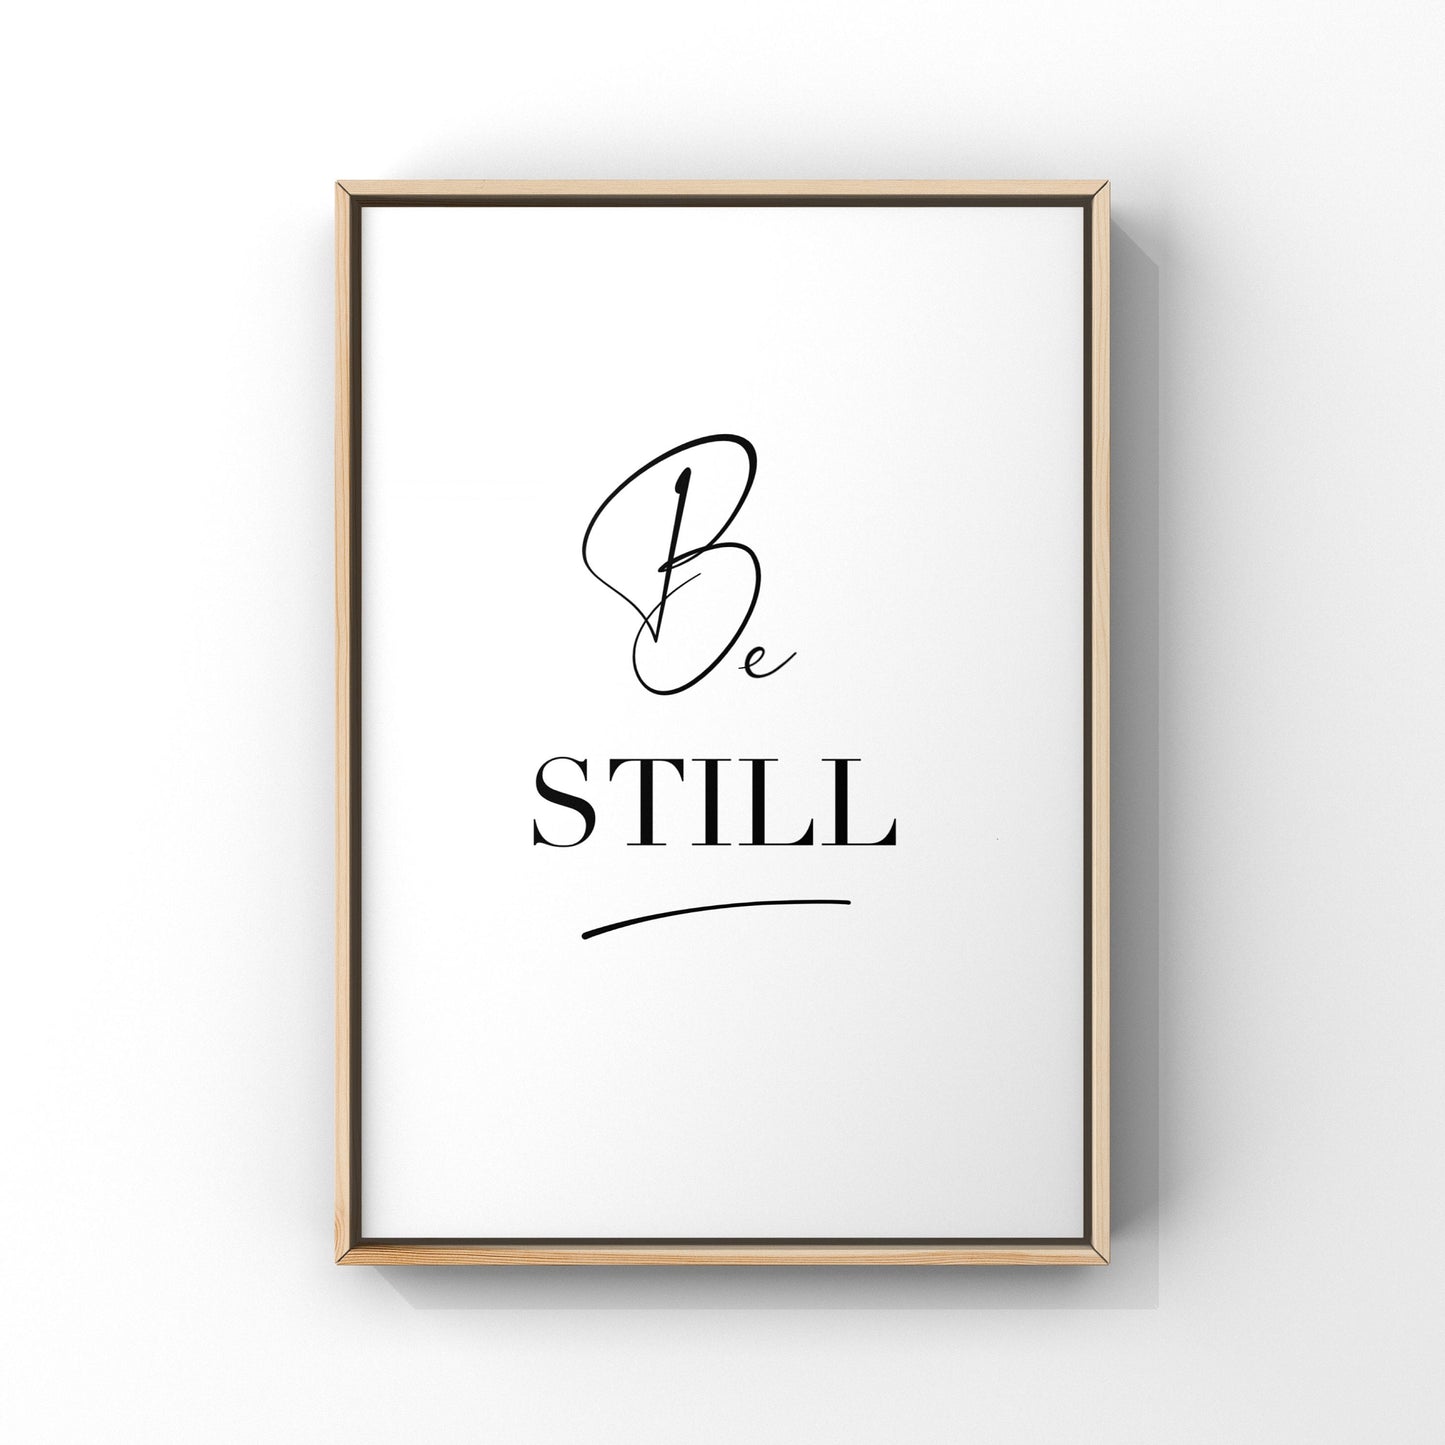 Be Still Print,Be Still Wall Art,Be Still Wall Decor,Be Still Quote Art,Home Wall Art,Above Bed Art,Inspirational Quotes,Motivational Saying